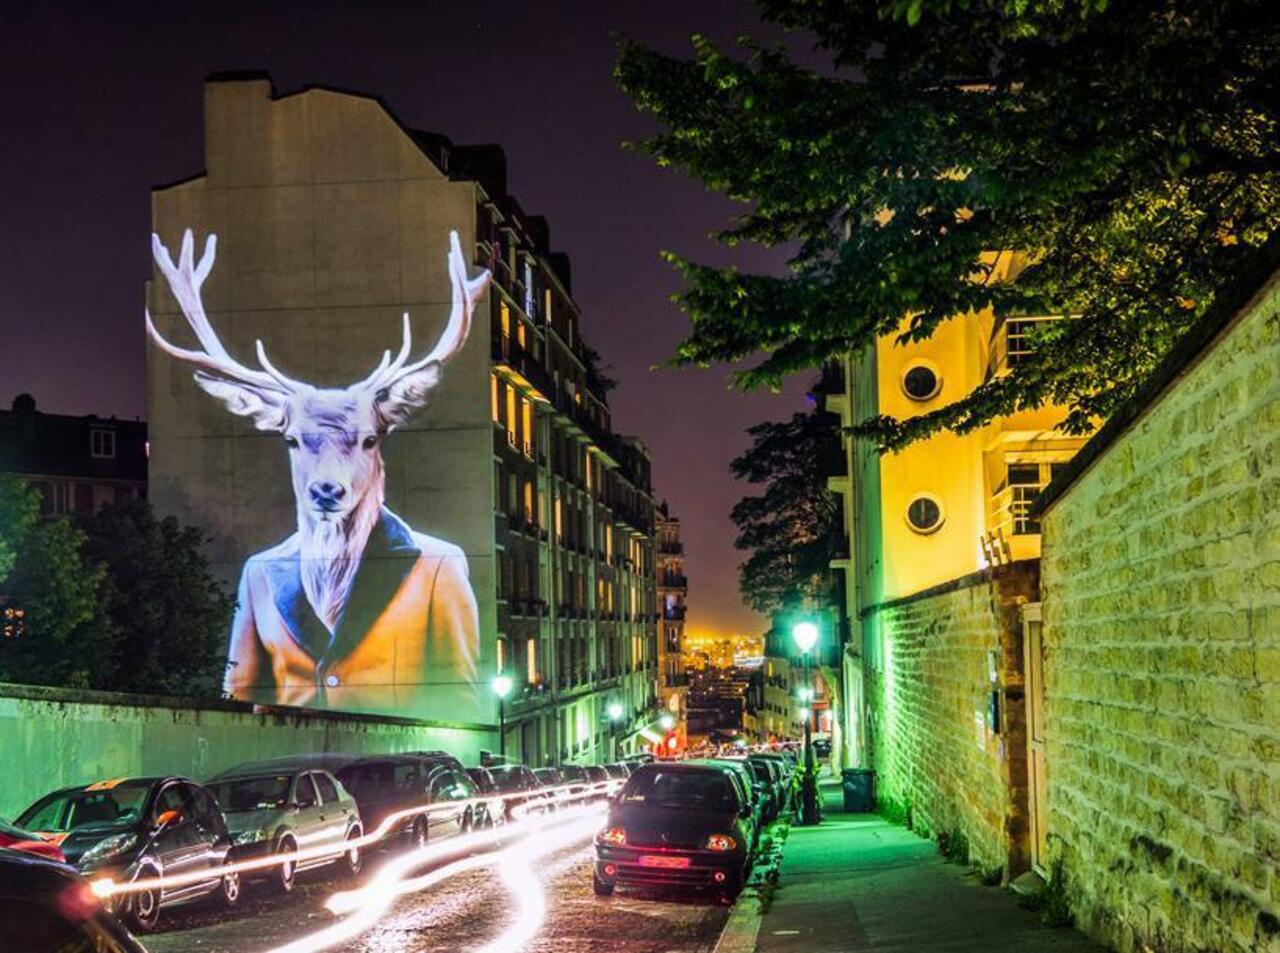 RT @richardbanfa: #streetart #paris #switch #bedifferent #graffiti #arte #art http://t.co/V8YQju5WR2